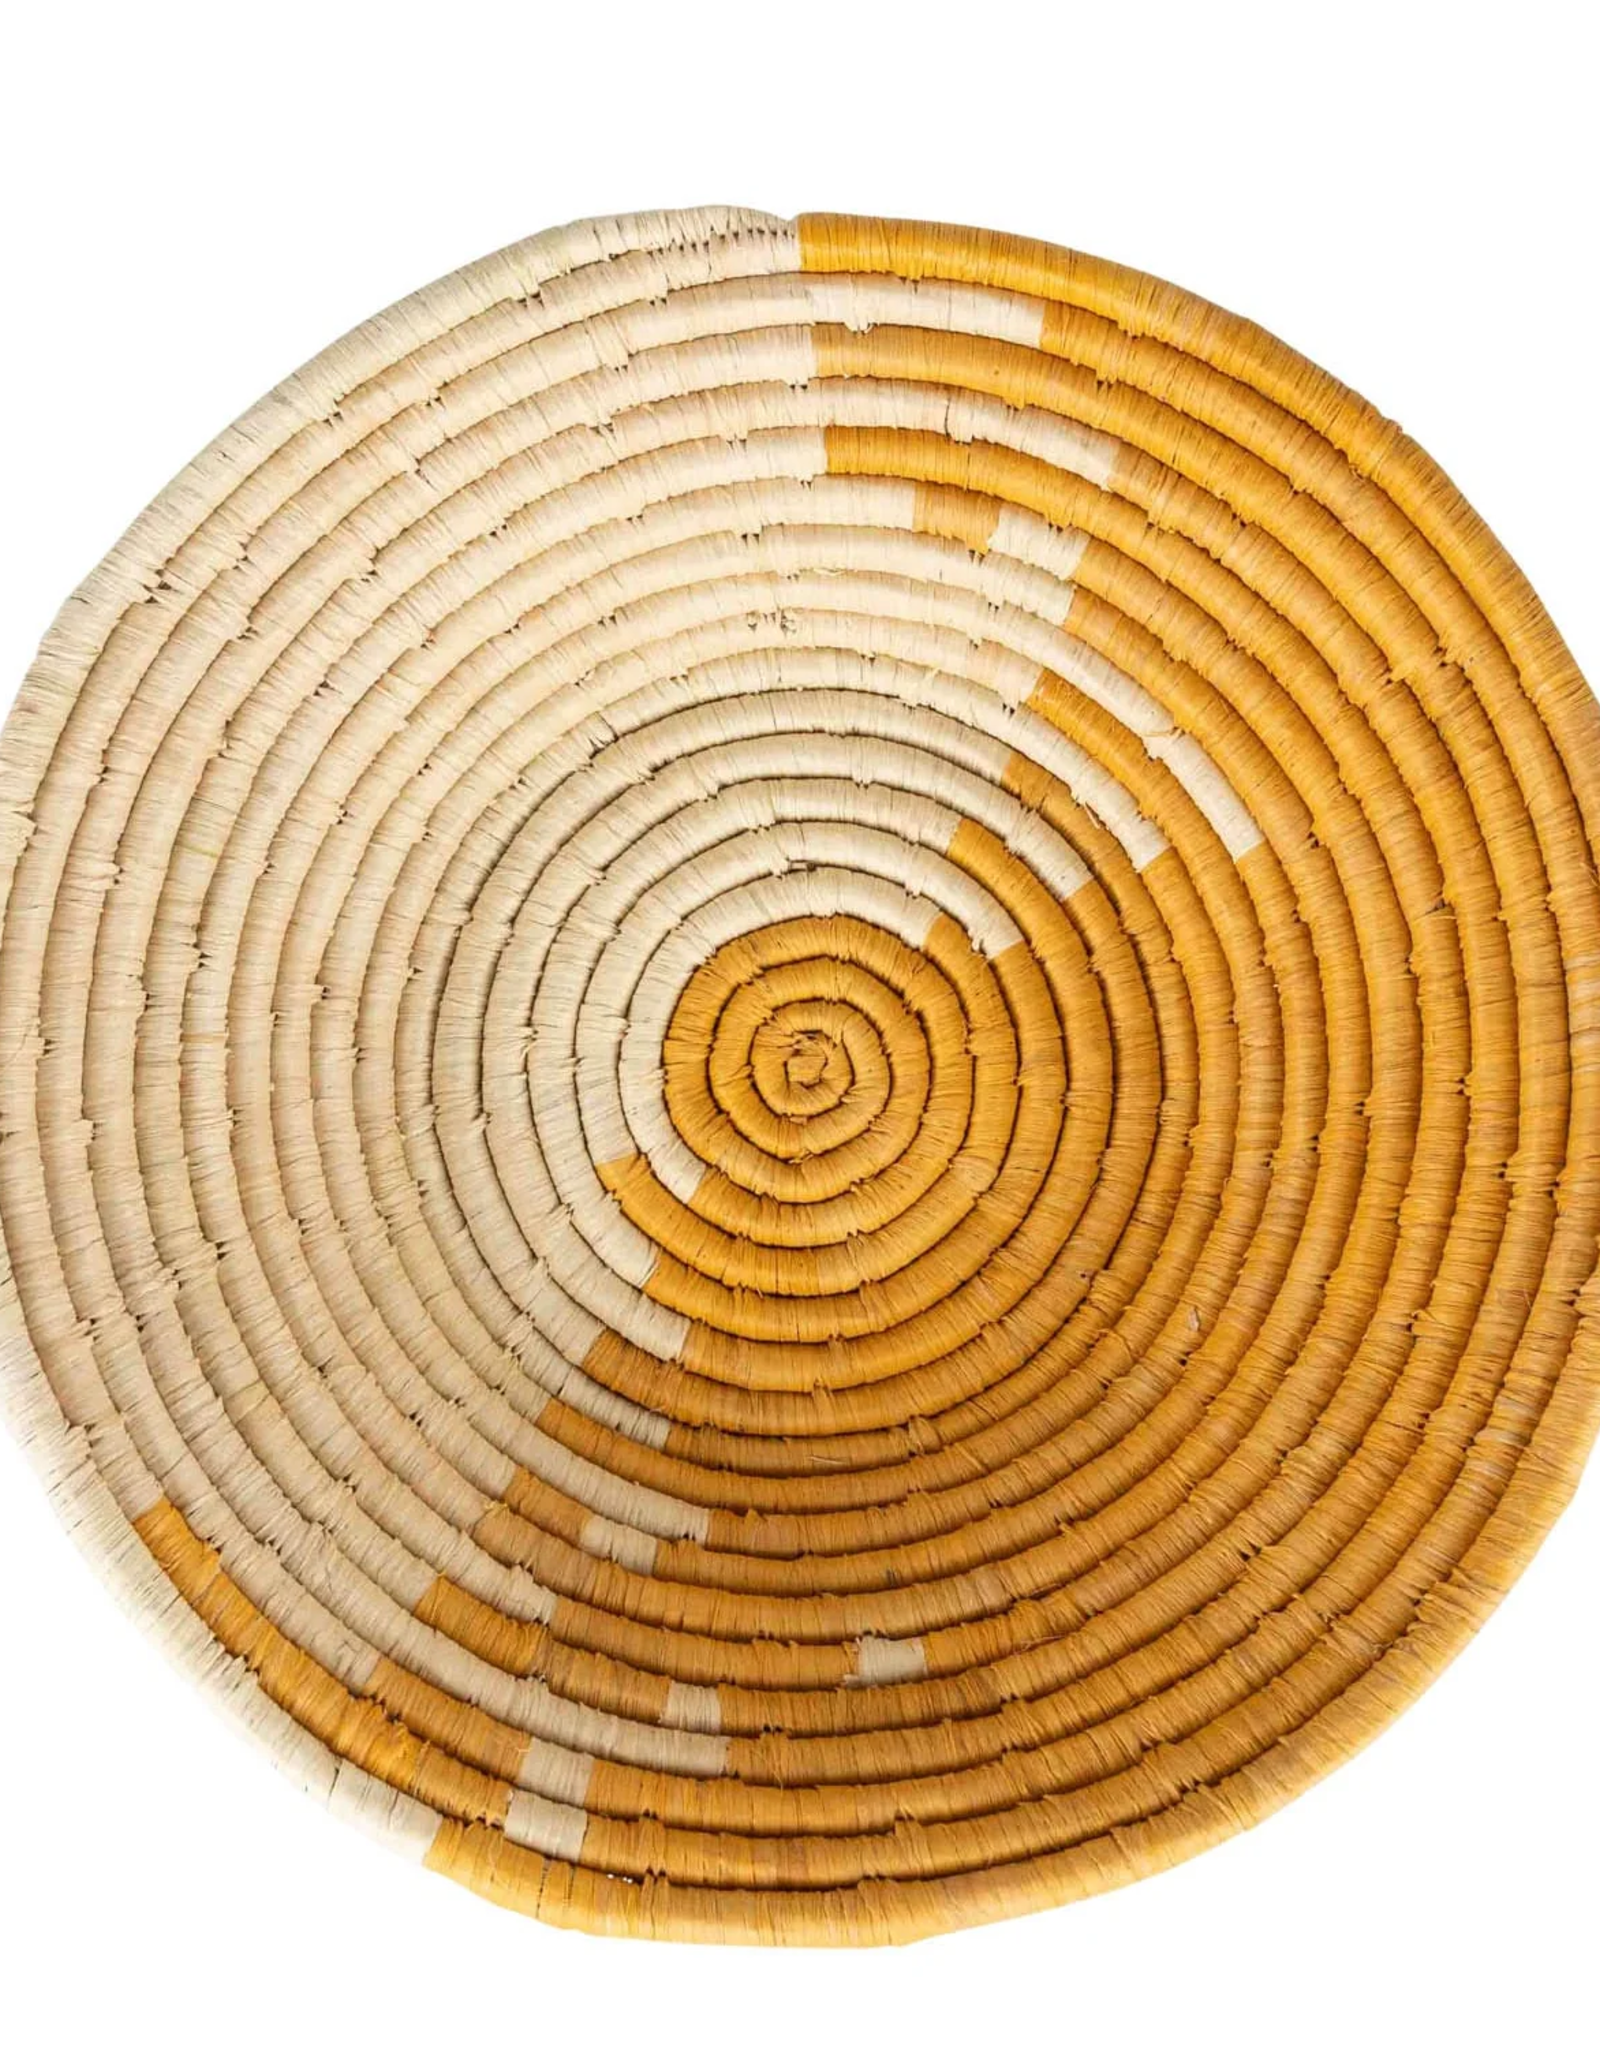 Raffia Spiral Baskets - 4 Colors!